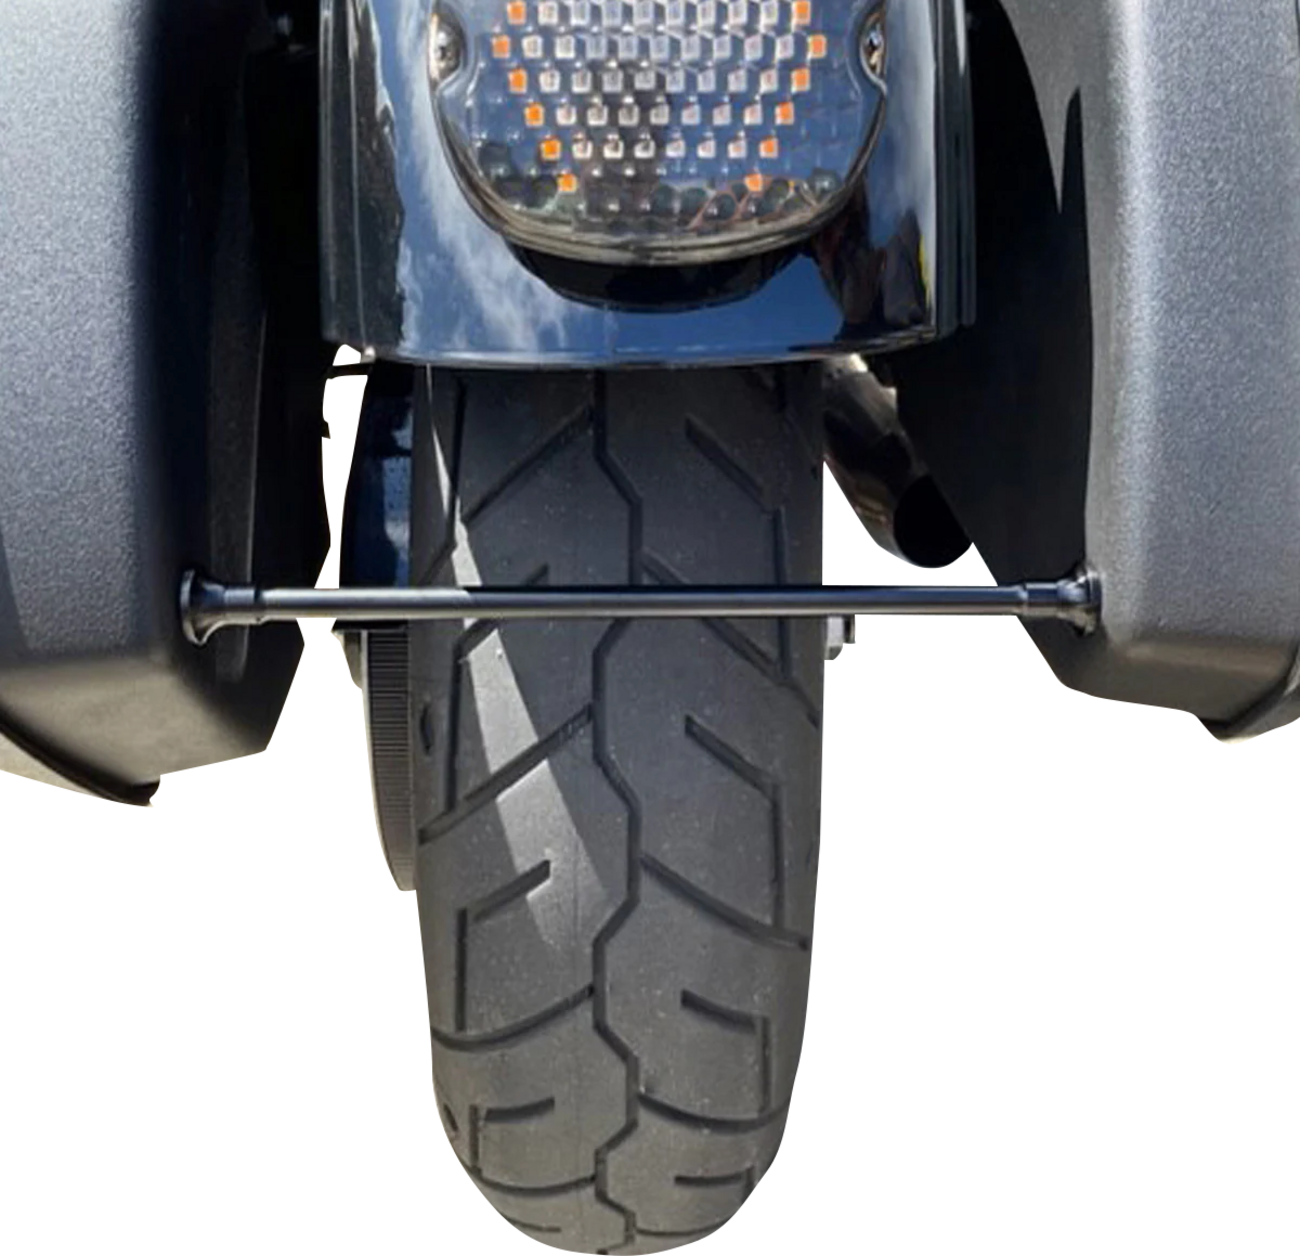 Stabilizer of saddlebags for Harley Davidson